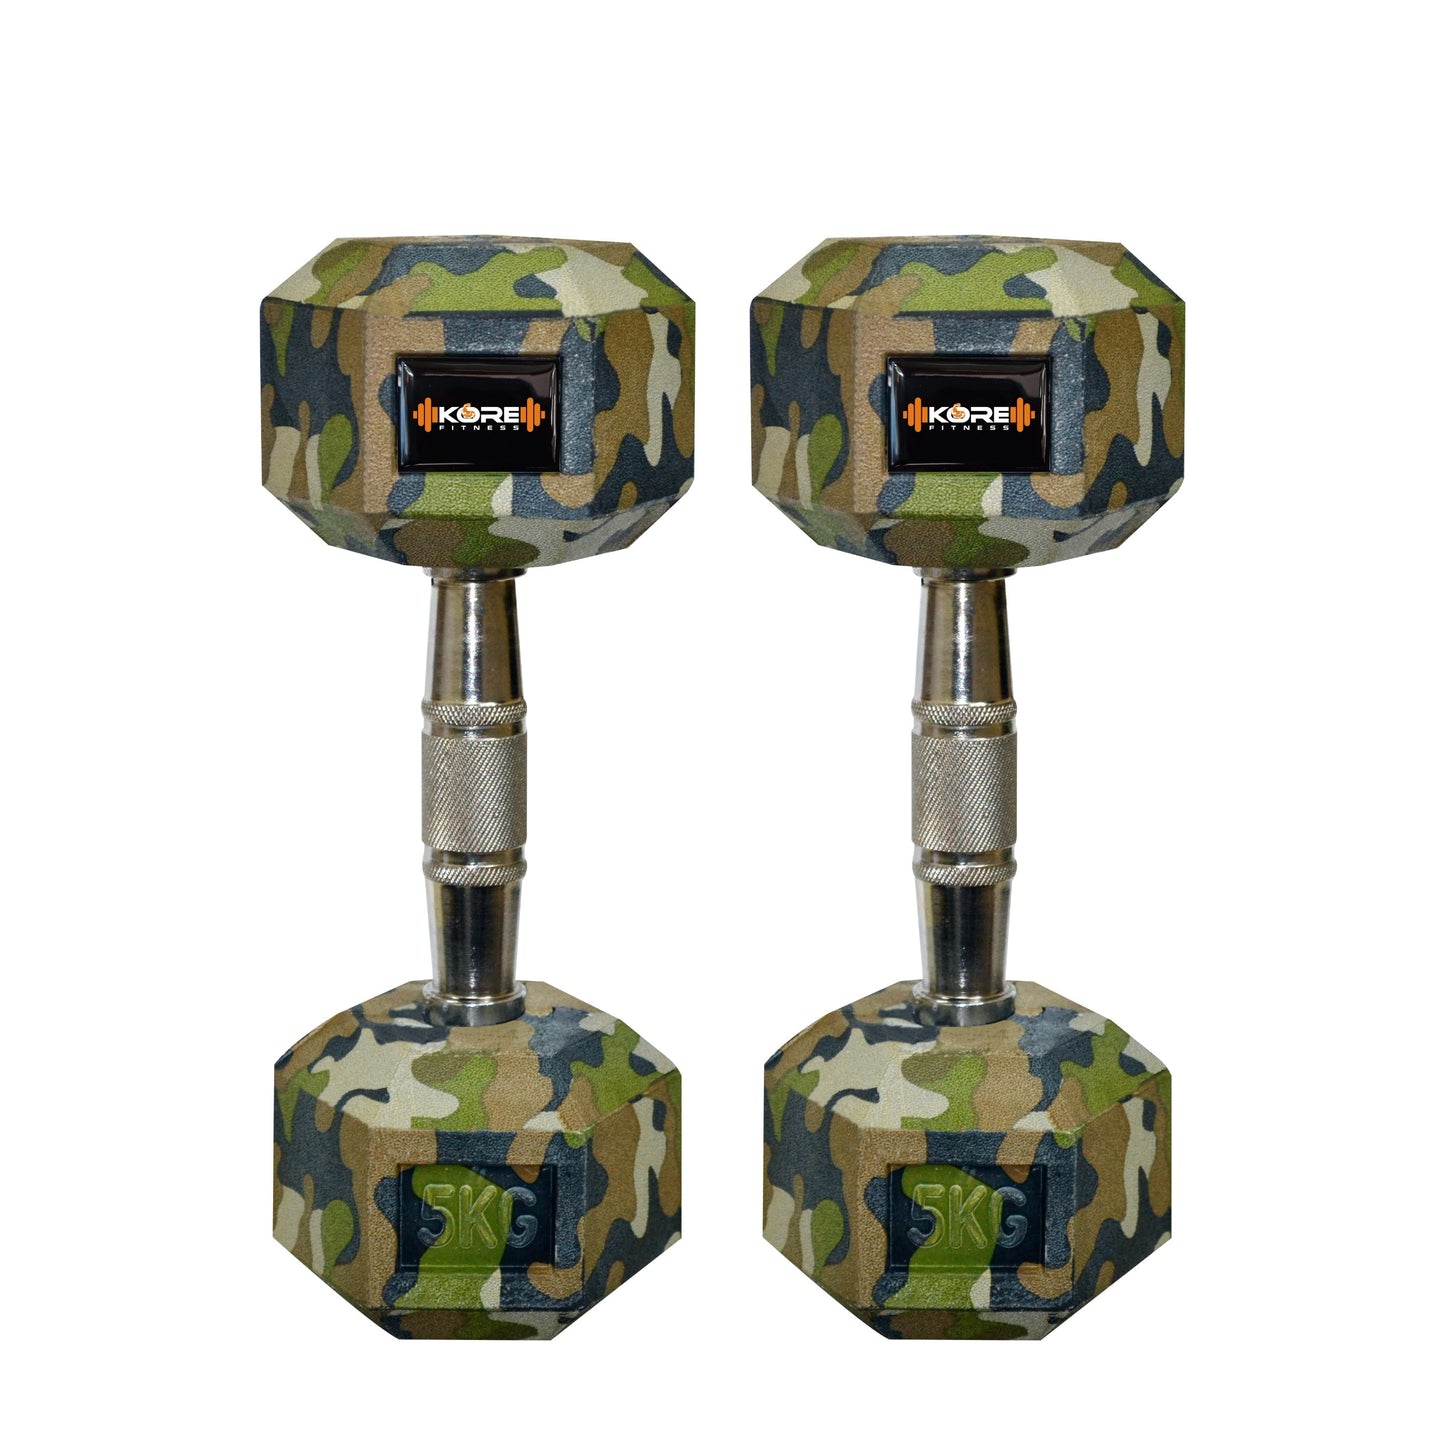 Kore Rubber Coated Professional 2.5-10 Kg (Set of Two) Hexa Fixed Dumbbells Home Gym Exercise Equipment for Men & Women, Camouflage (DM-HEXA-COMBO16-CAMO)